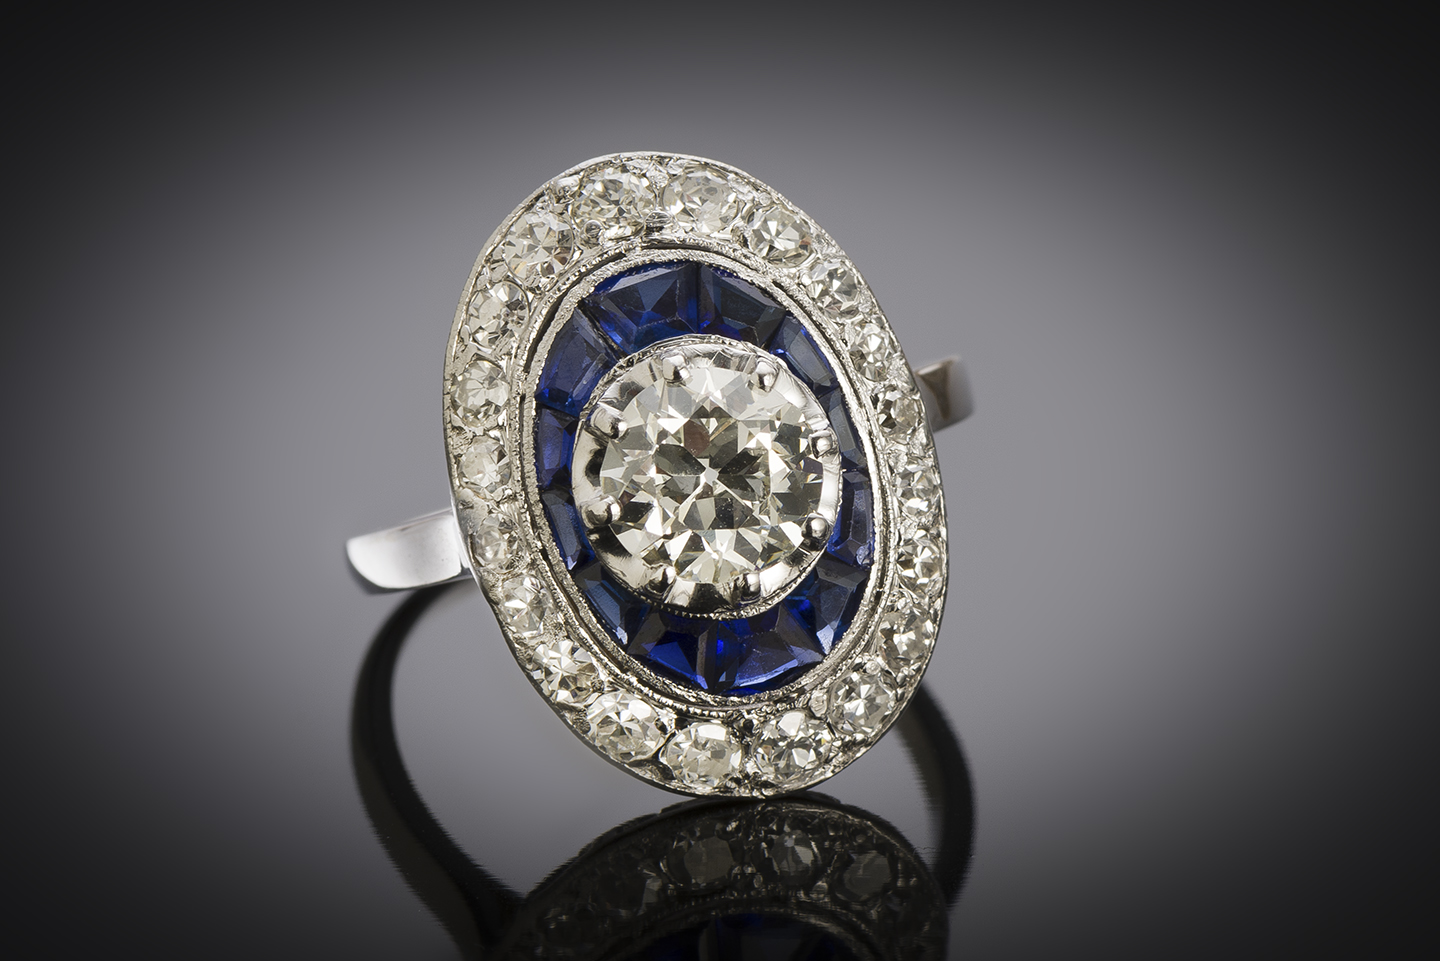 French Art Deco diamond ring (2 carats)-2